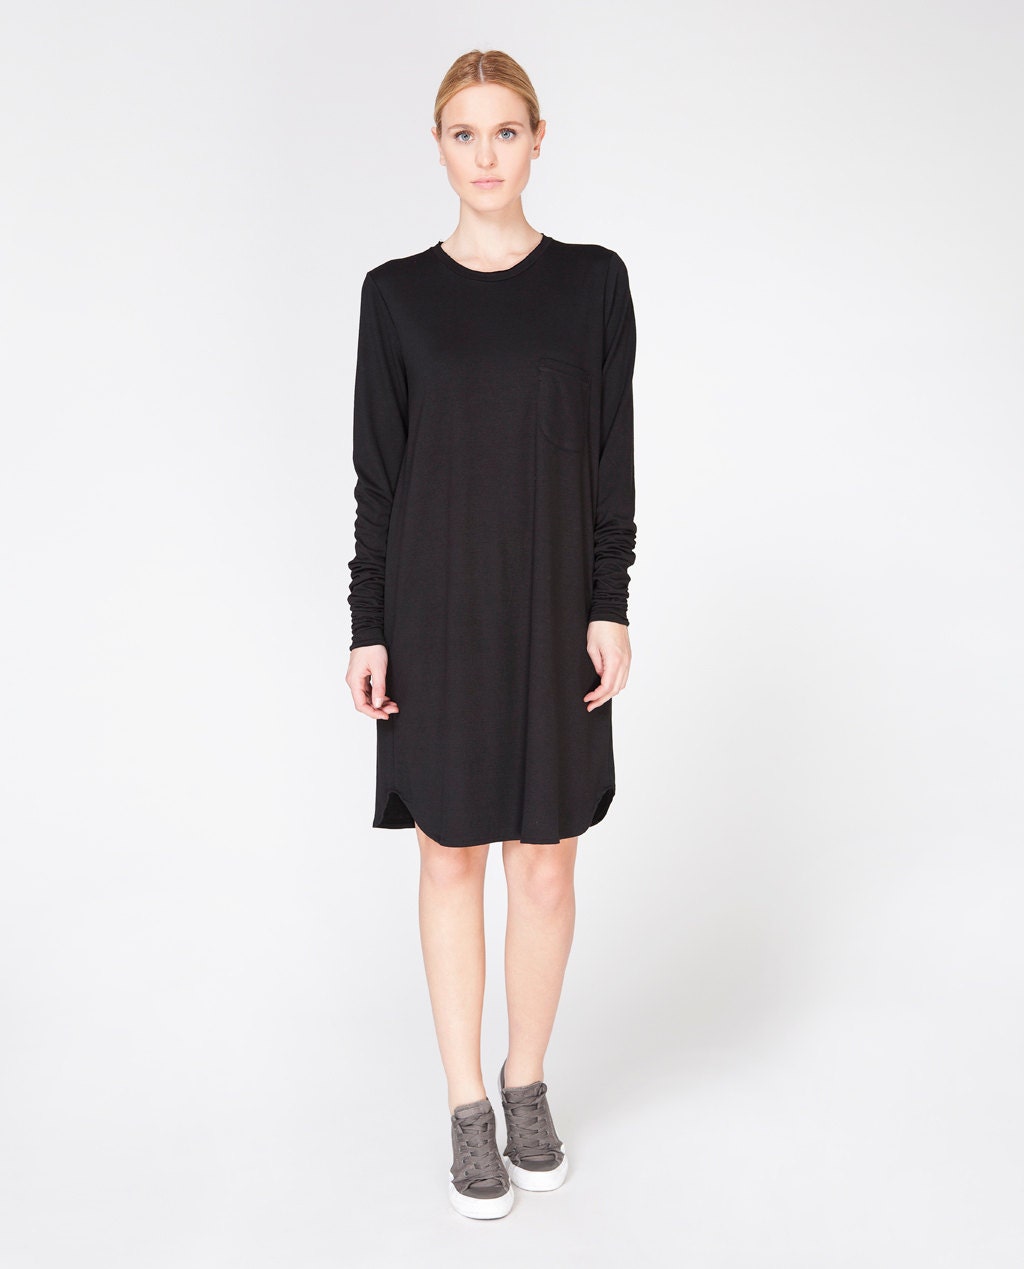 Long Sleeve Dress Oversize Dress Black Dress Casual Style